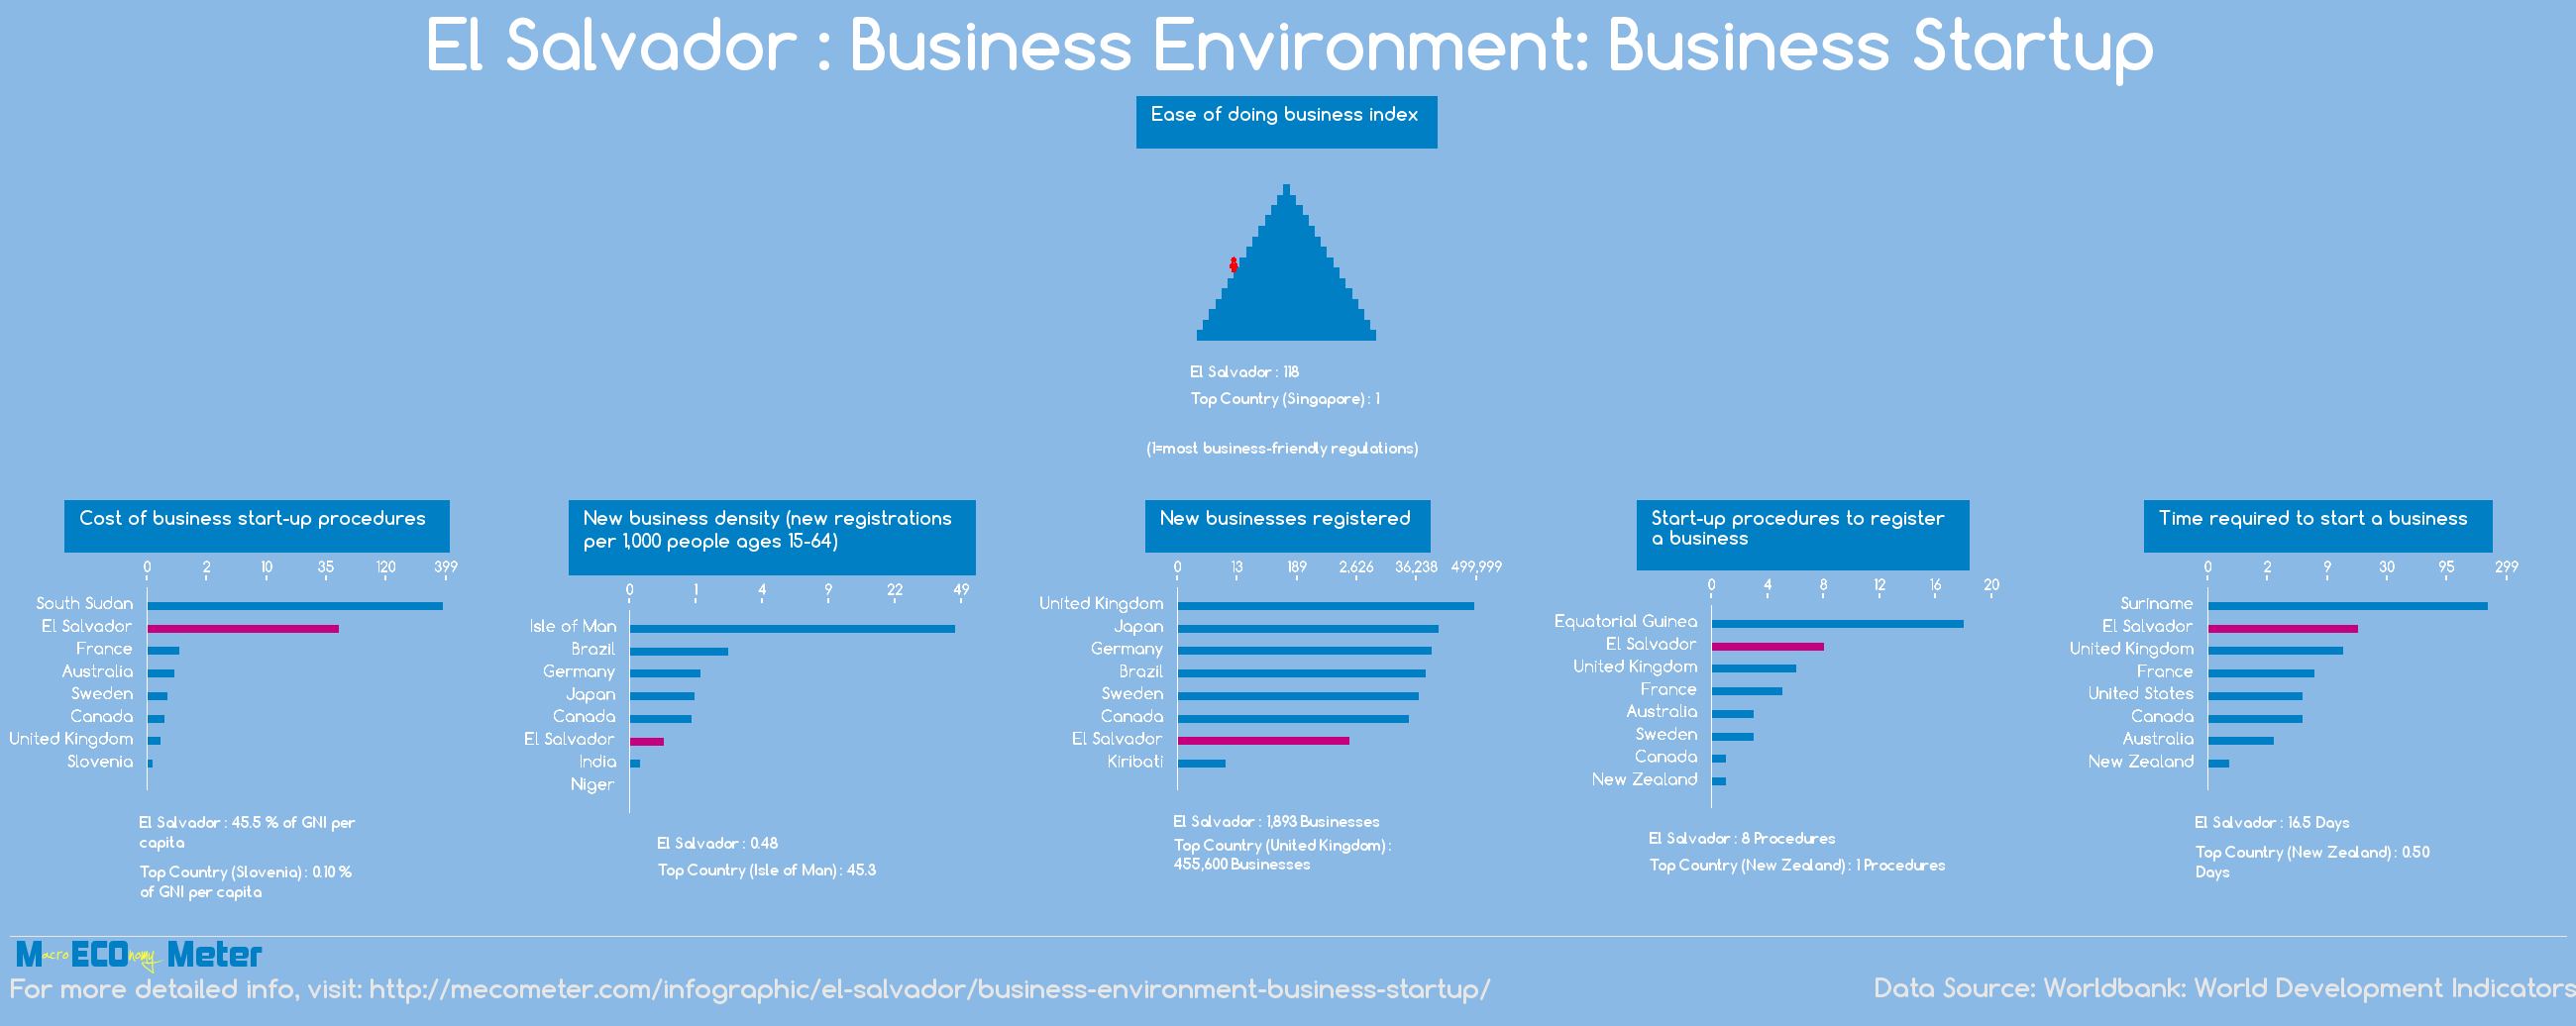 El Salvador : Business Environment: Business Startup